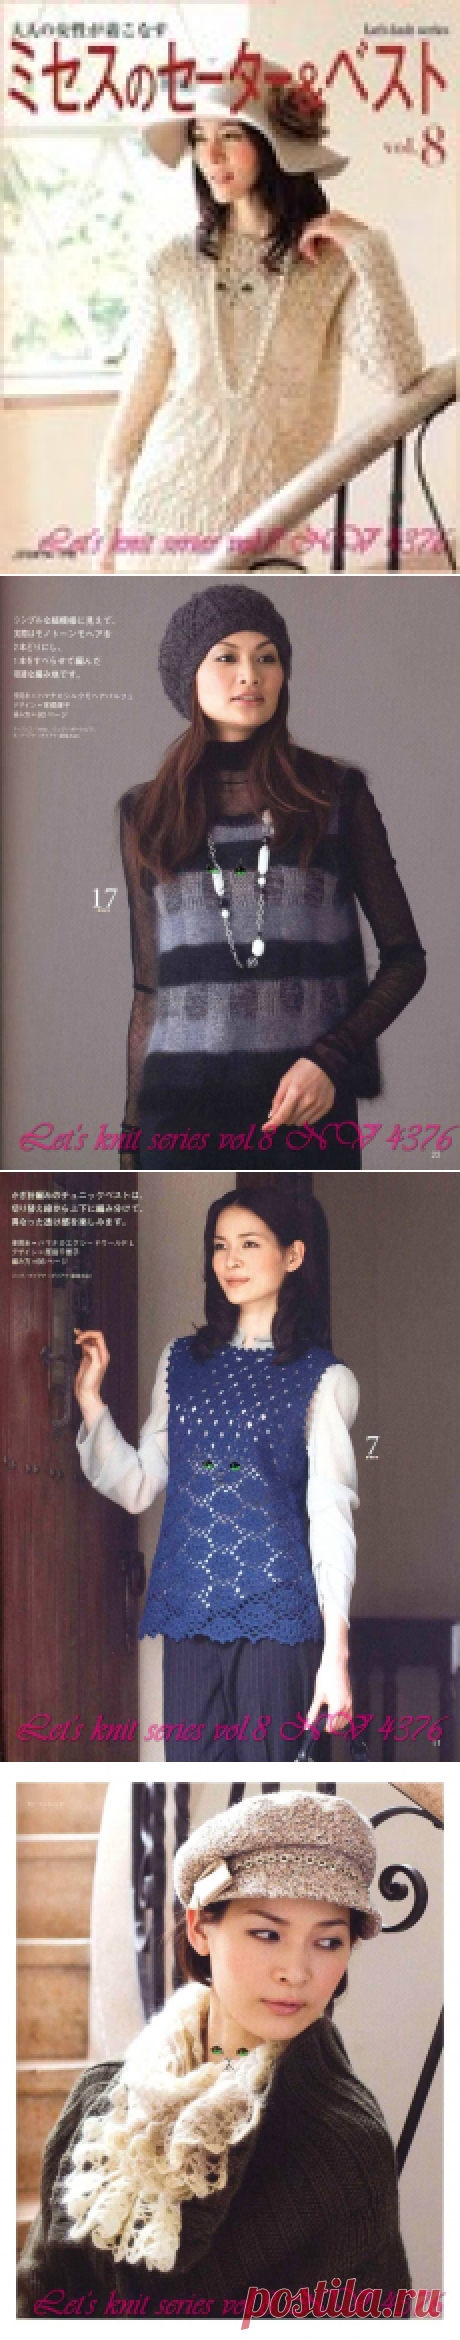 Let’s knit series vol.8 NV4376.